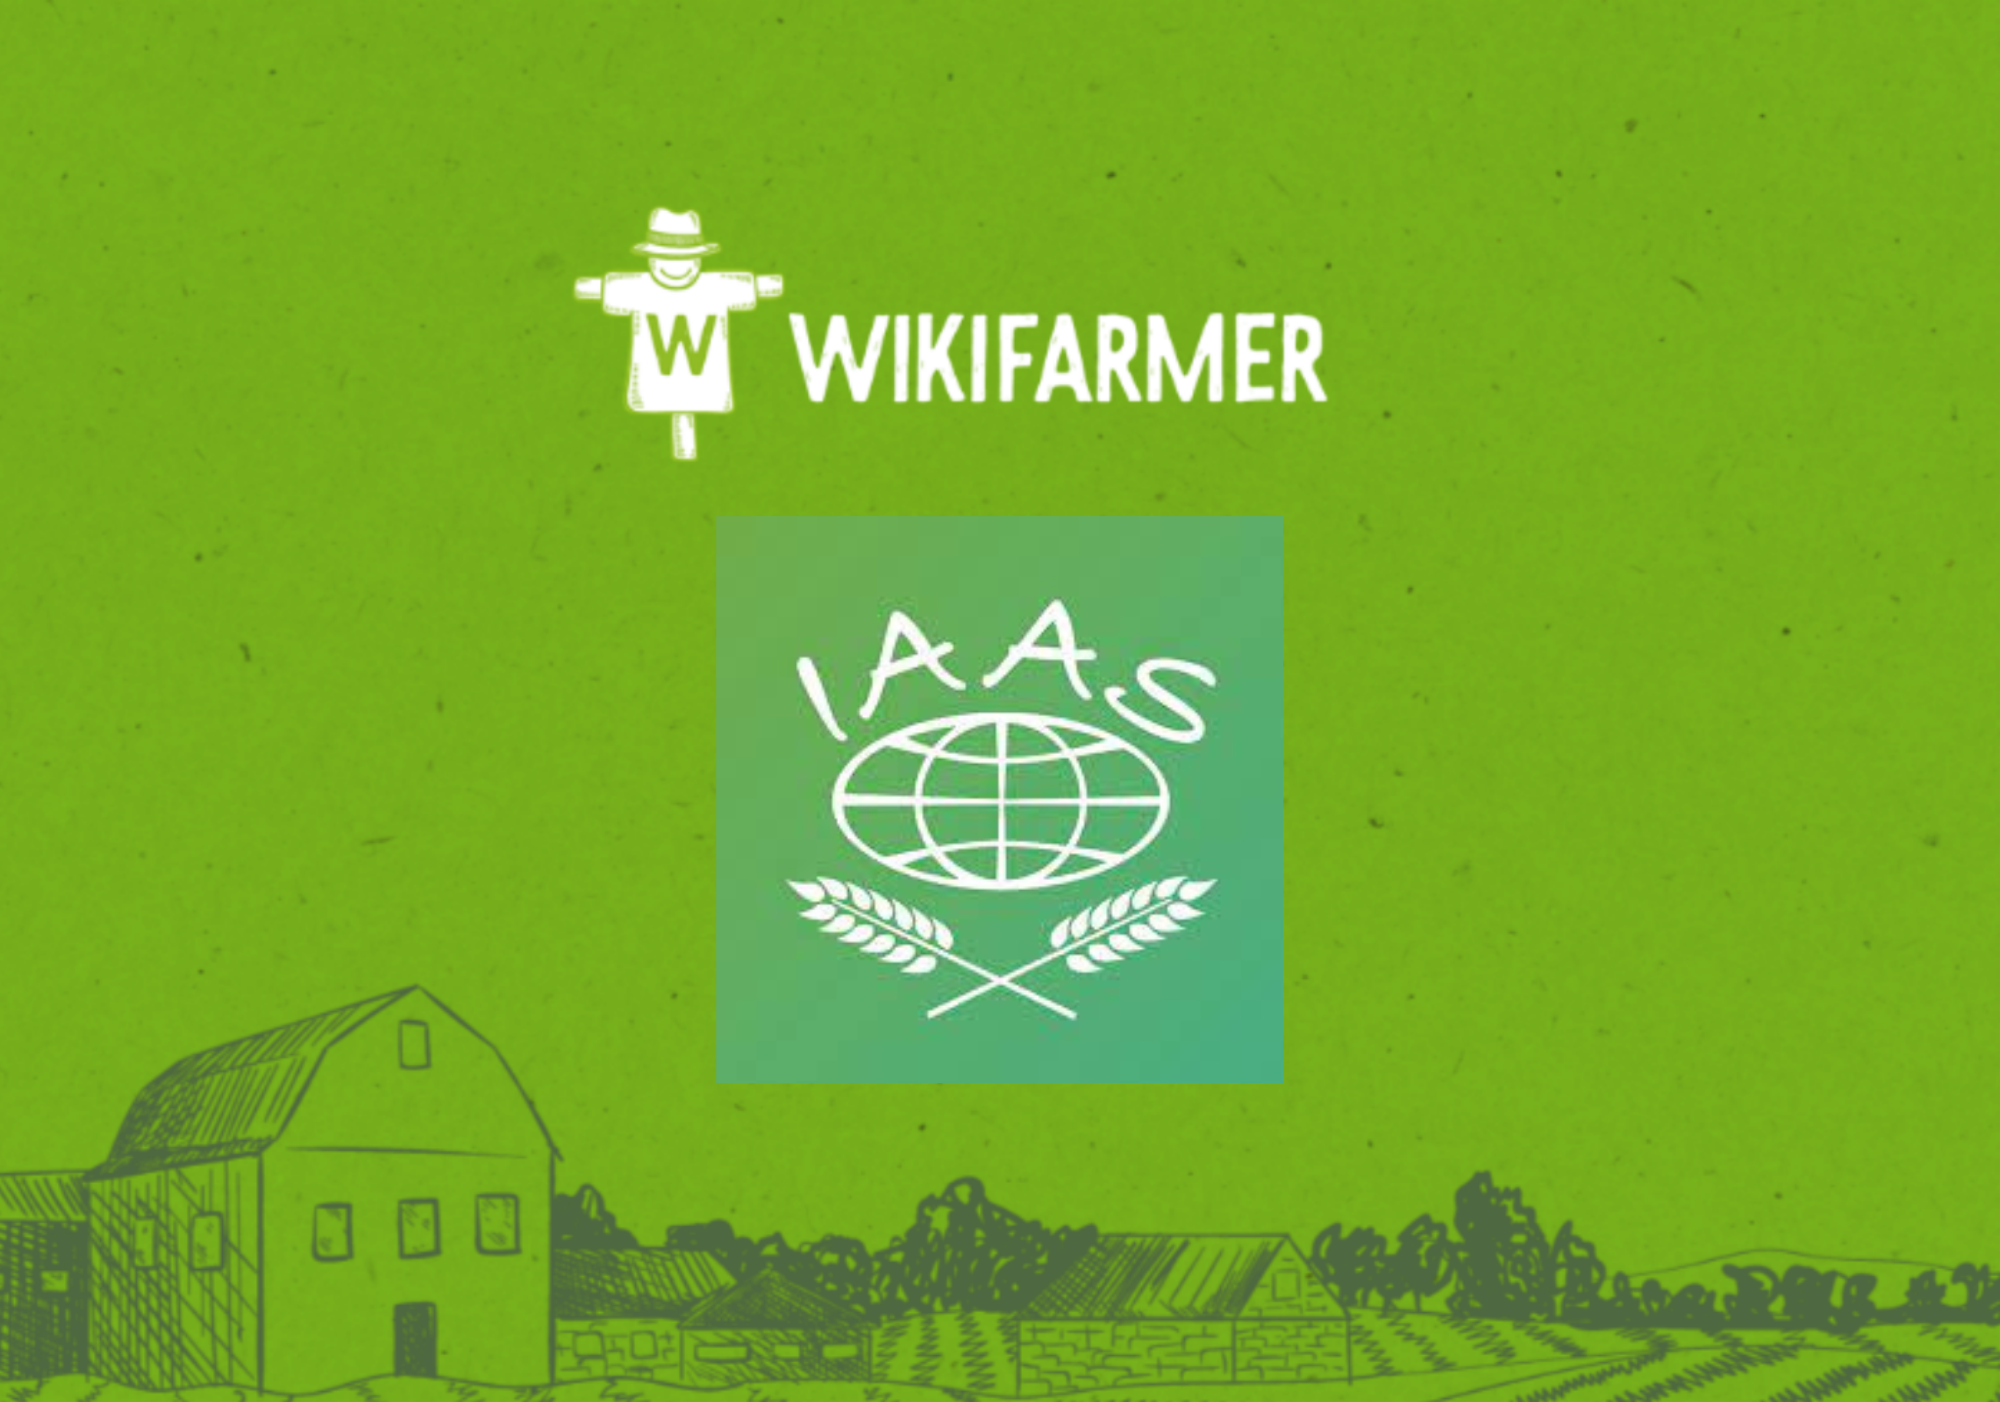 Partnership between Wikifarmer and IAAS